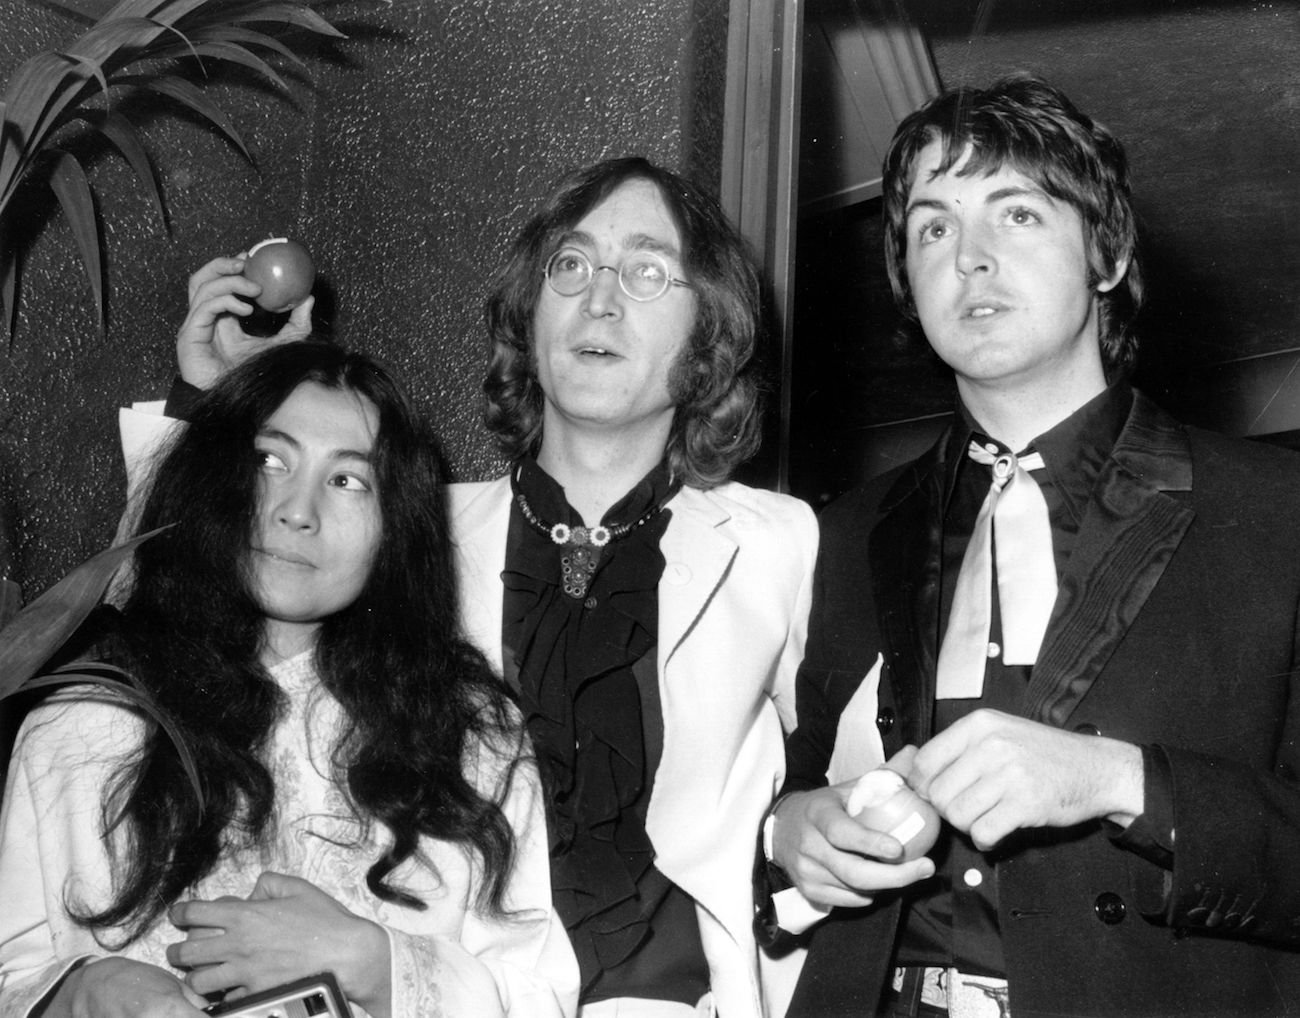 Yoko Ono, John Lennon, and Paul McCartney at the premiere of 'Yellow Submarine' in 1968.